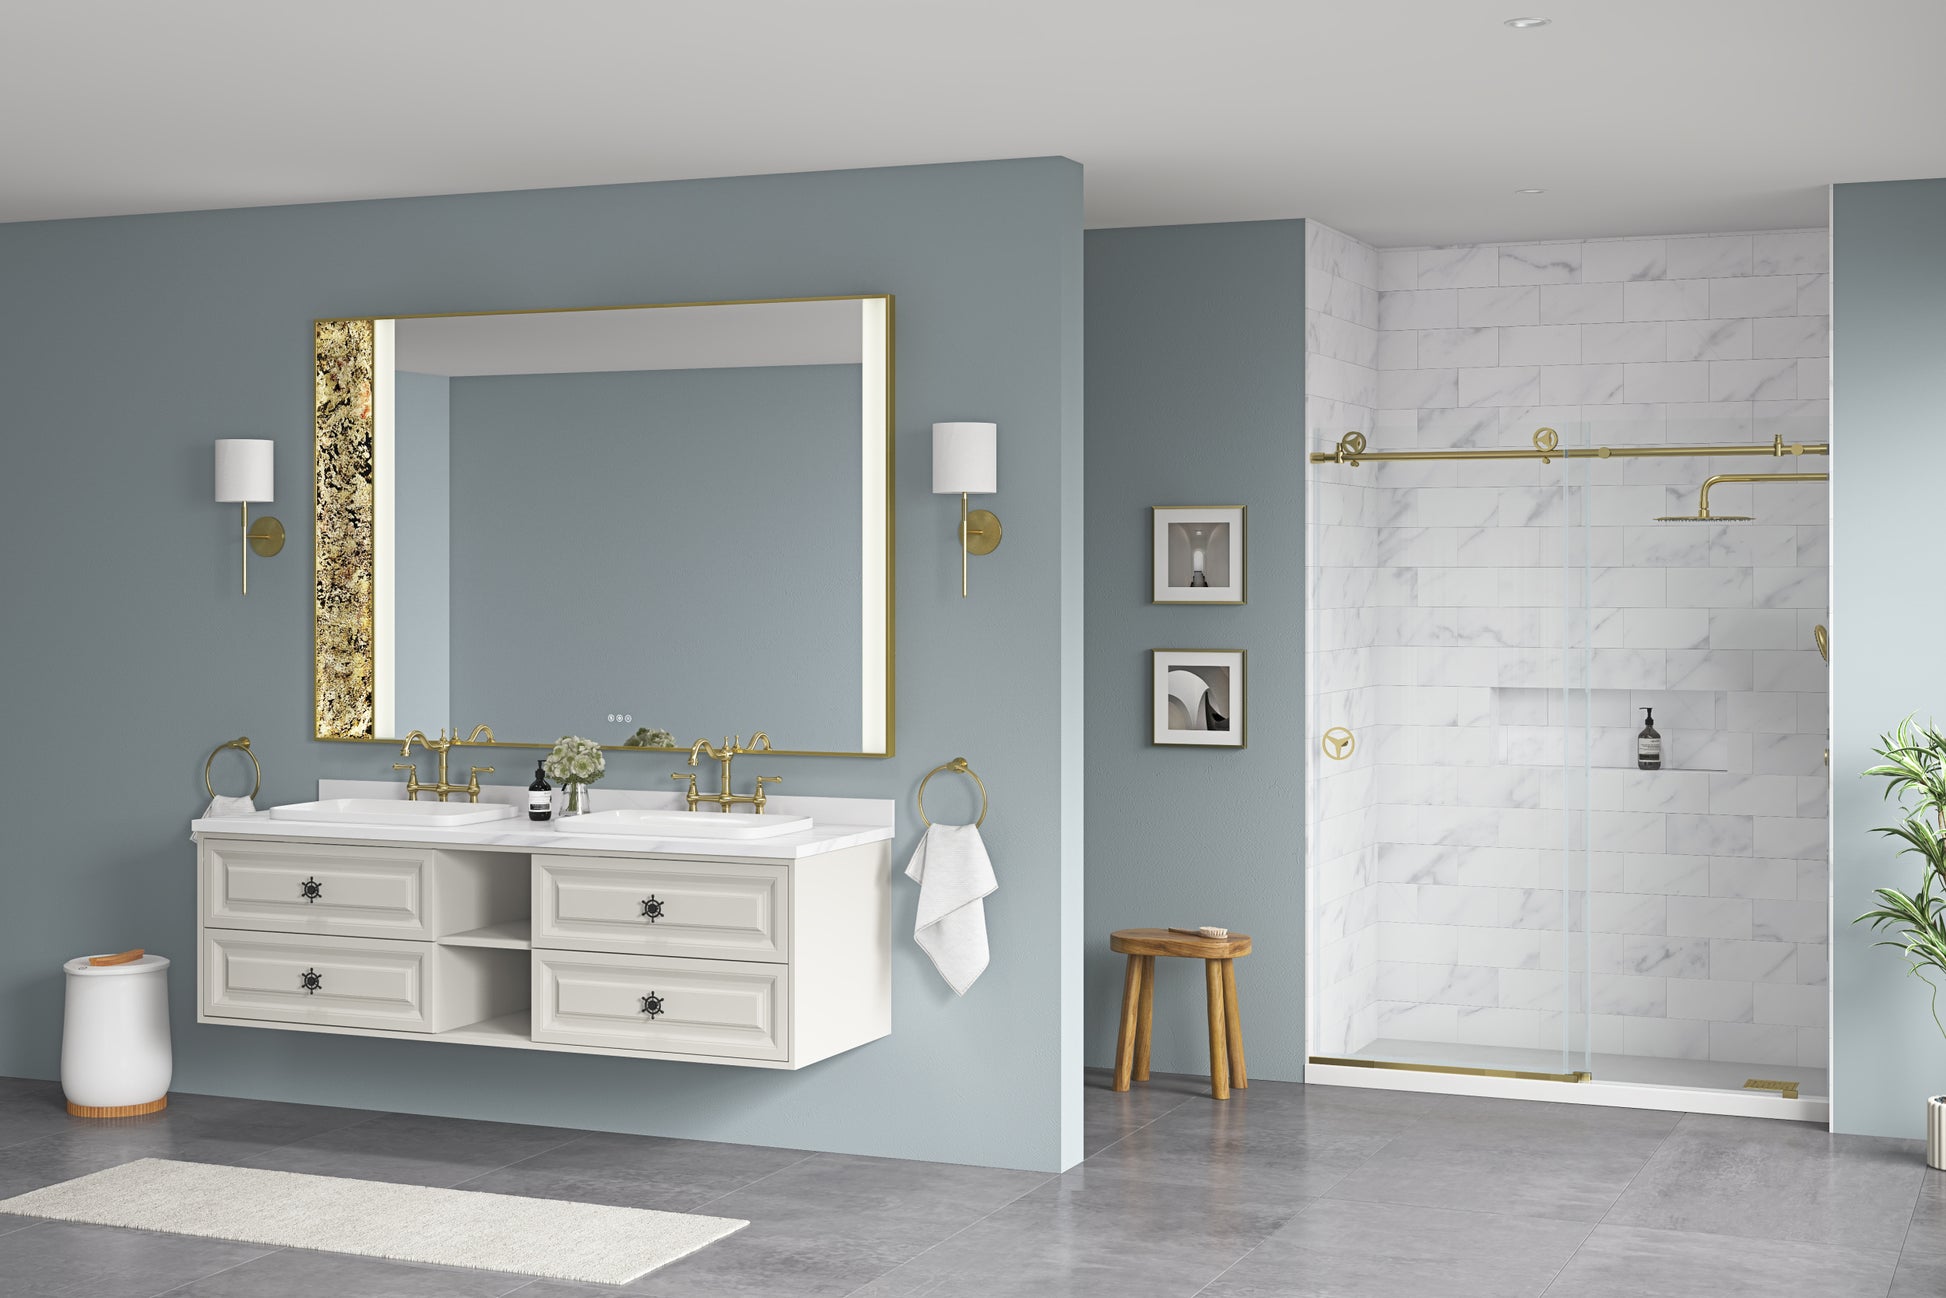 72x 48Inch LED Mirror Bathroom Vanity Mirror with Back gold-aluminium